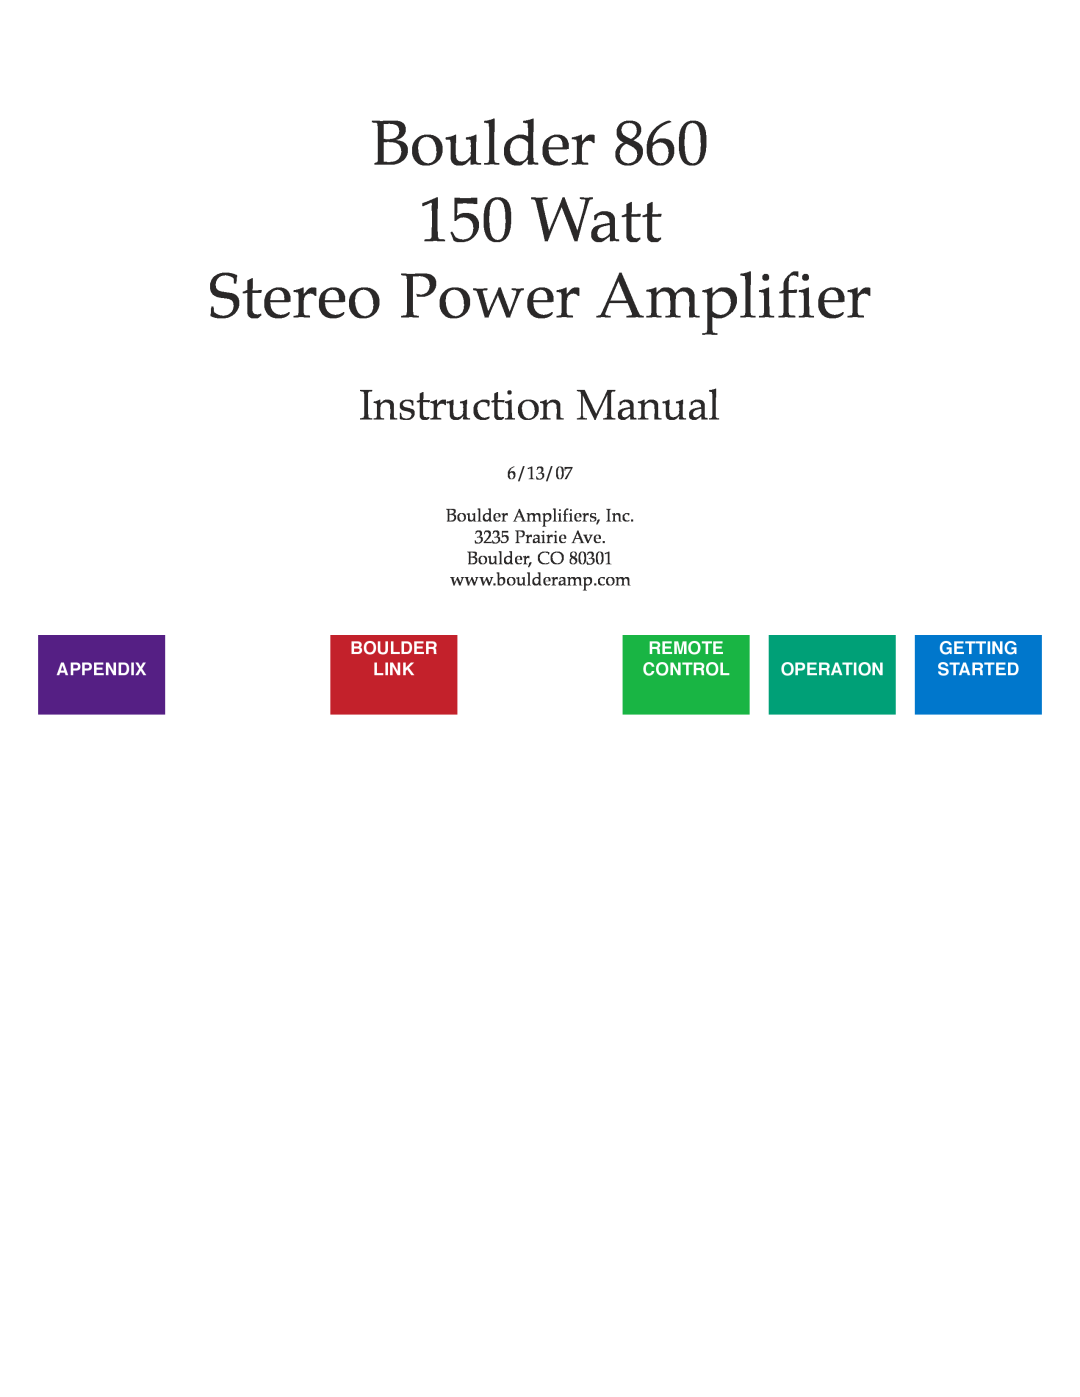 Boulder Amplifiers 860 manual Boulder 150 Watt Stereo Power Amplifier, Remote, Getting, Appendix, Link, Control, Operation 